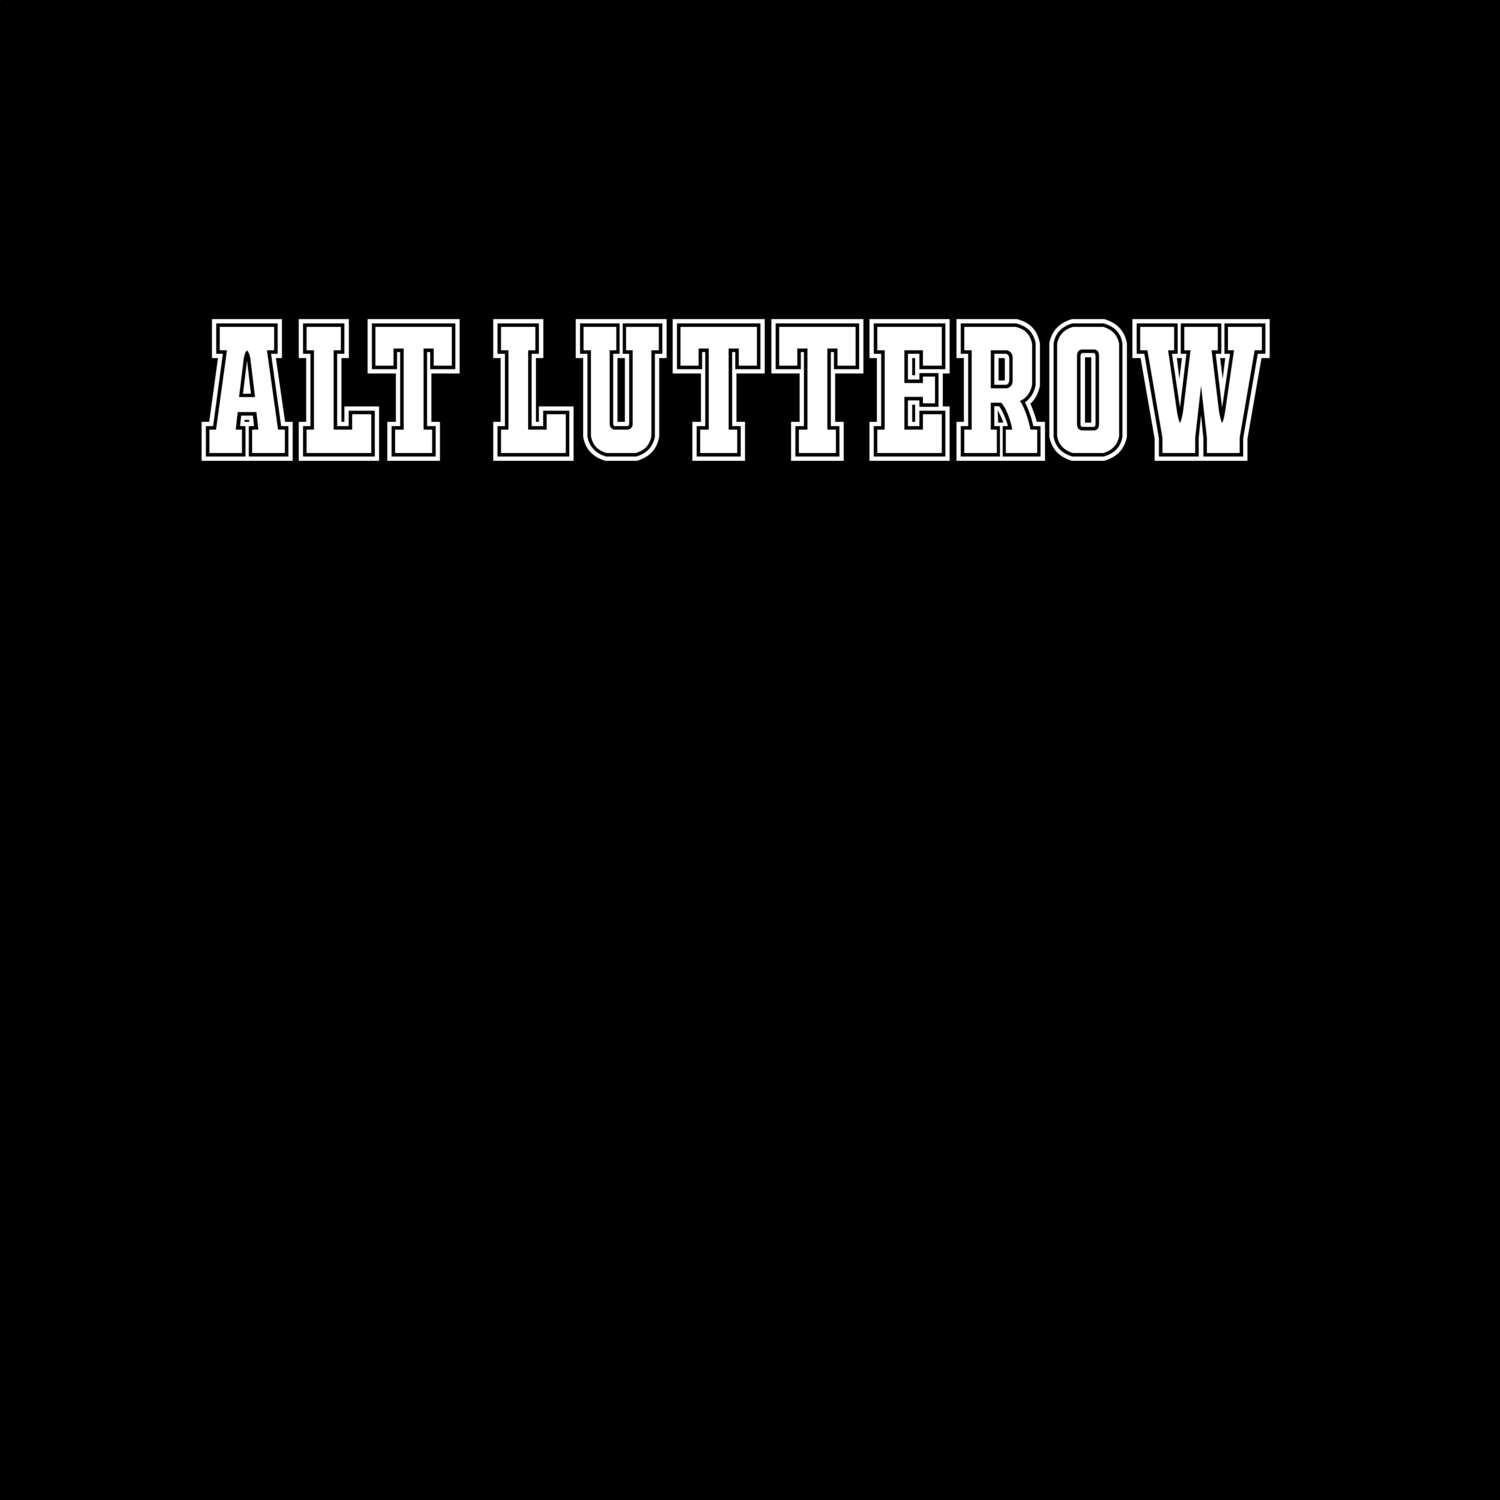 Alt Lutterow T-Shirt »Classic«